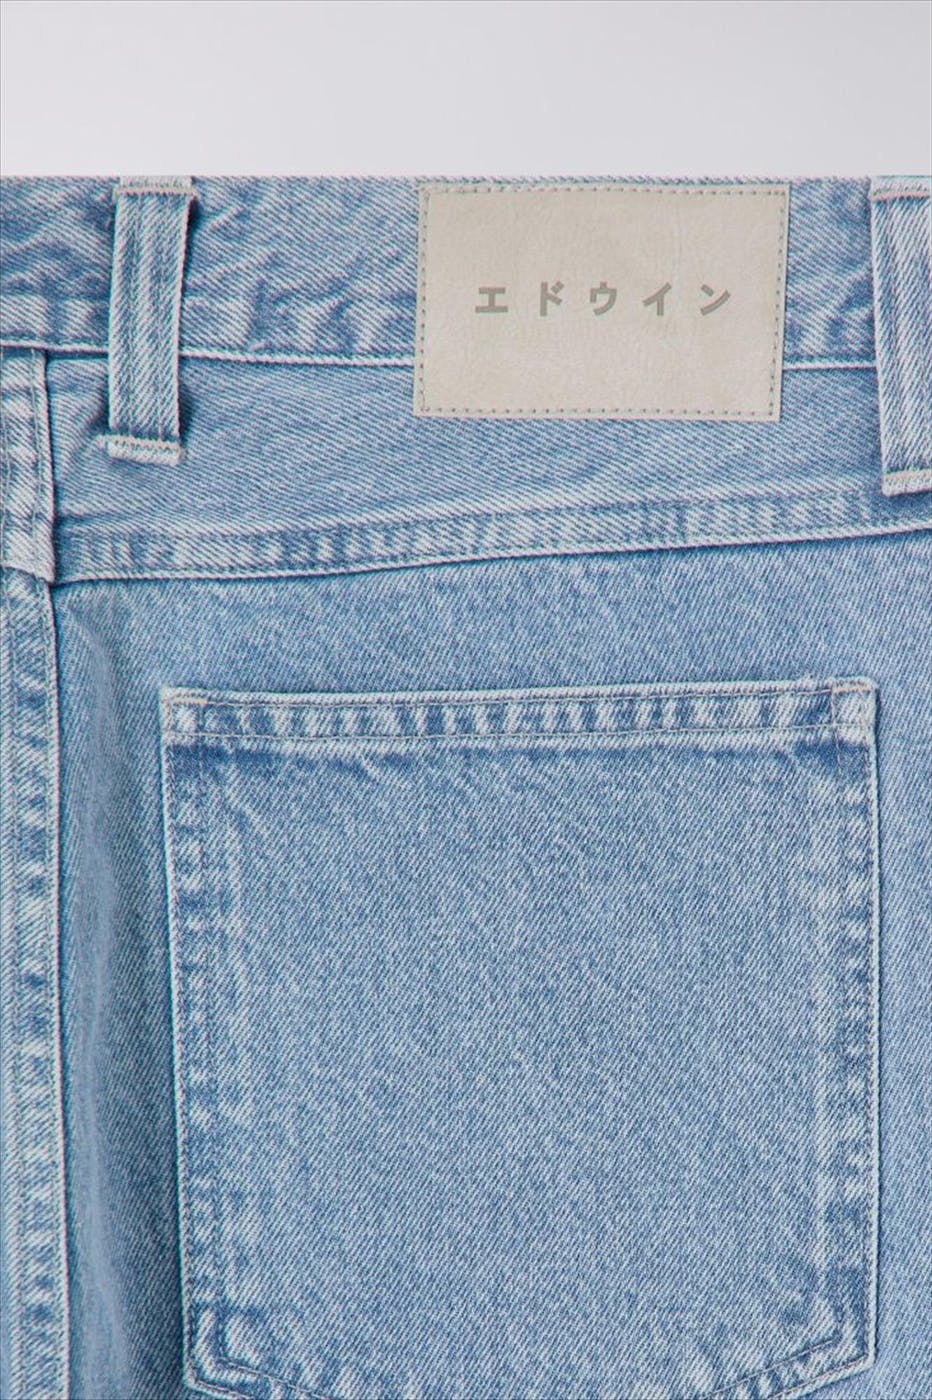 Edwin - Lichtblauwe Matrix jeans